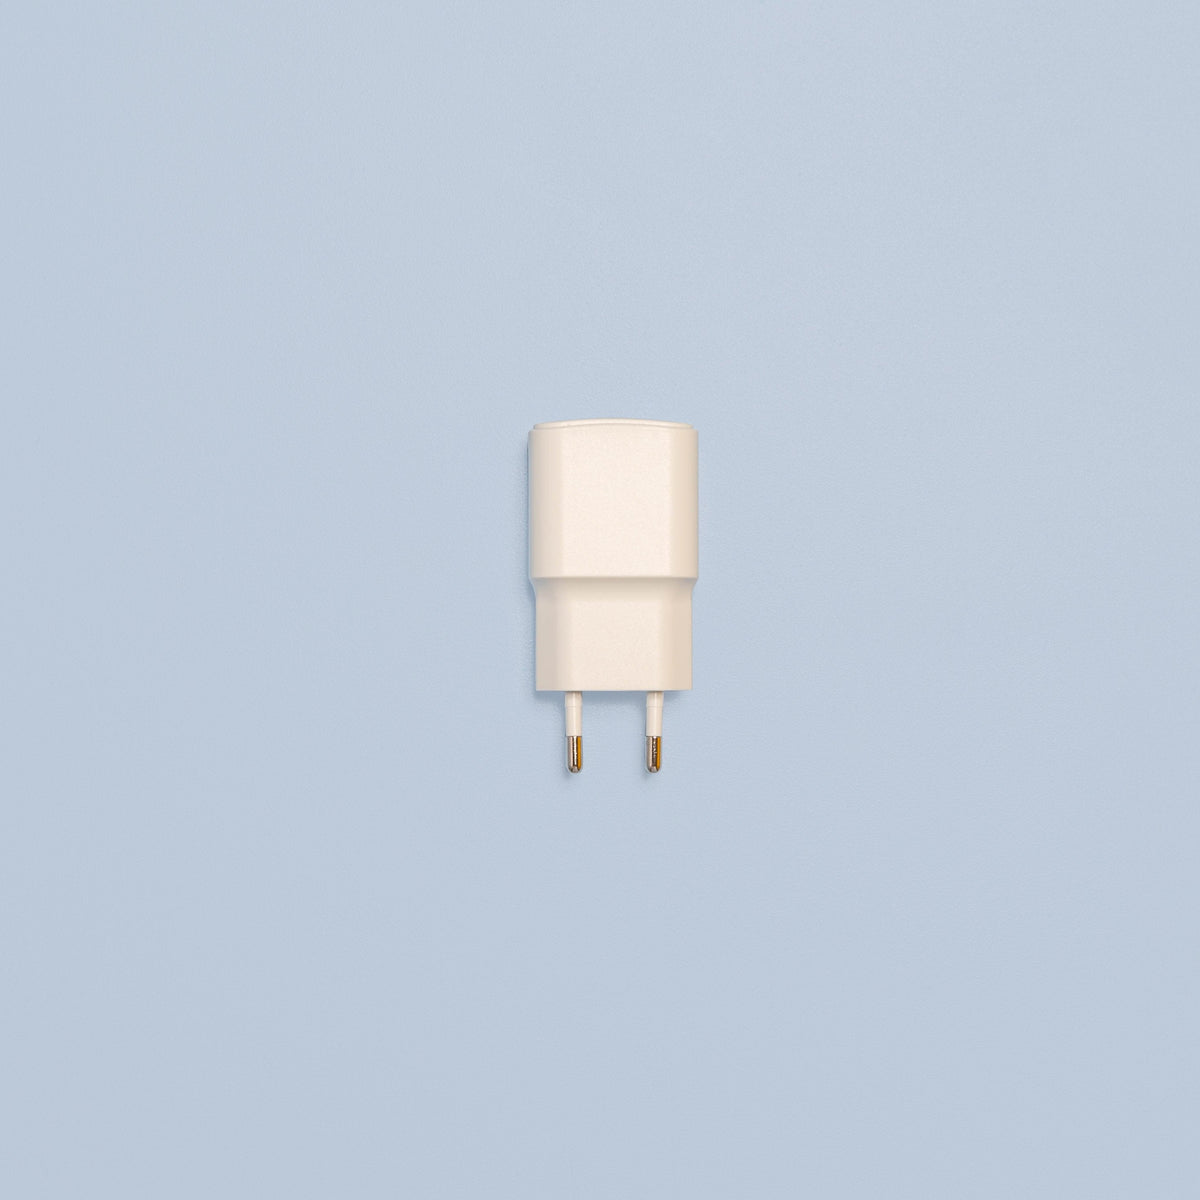 Modulo metal luminaire - Without USB socket